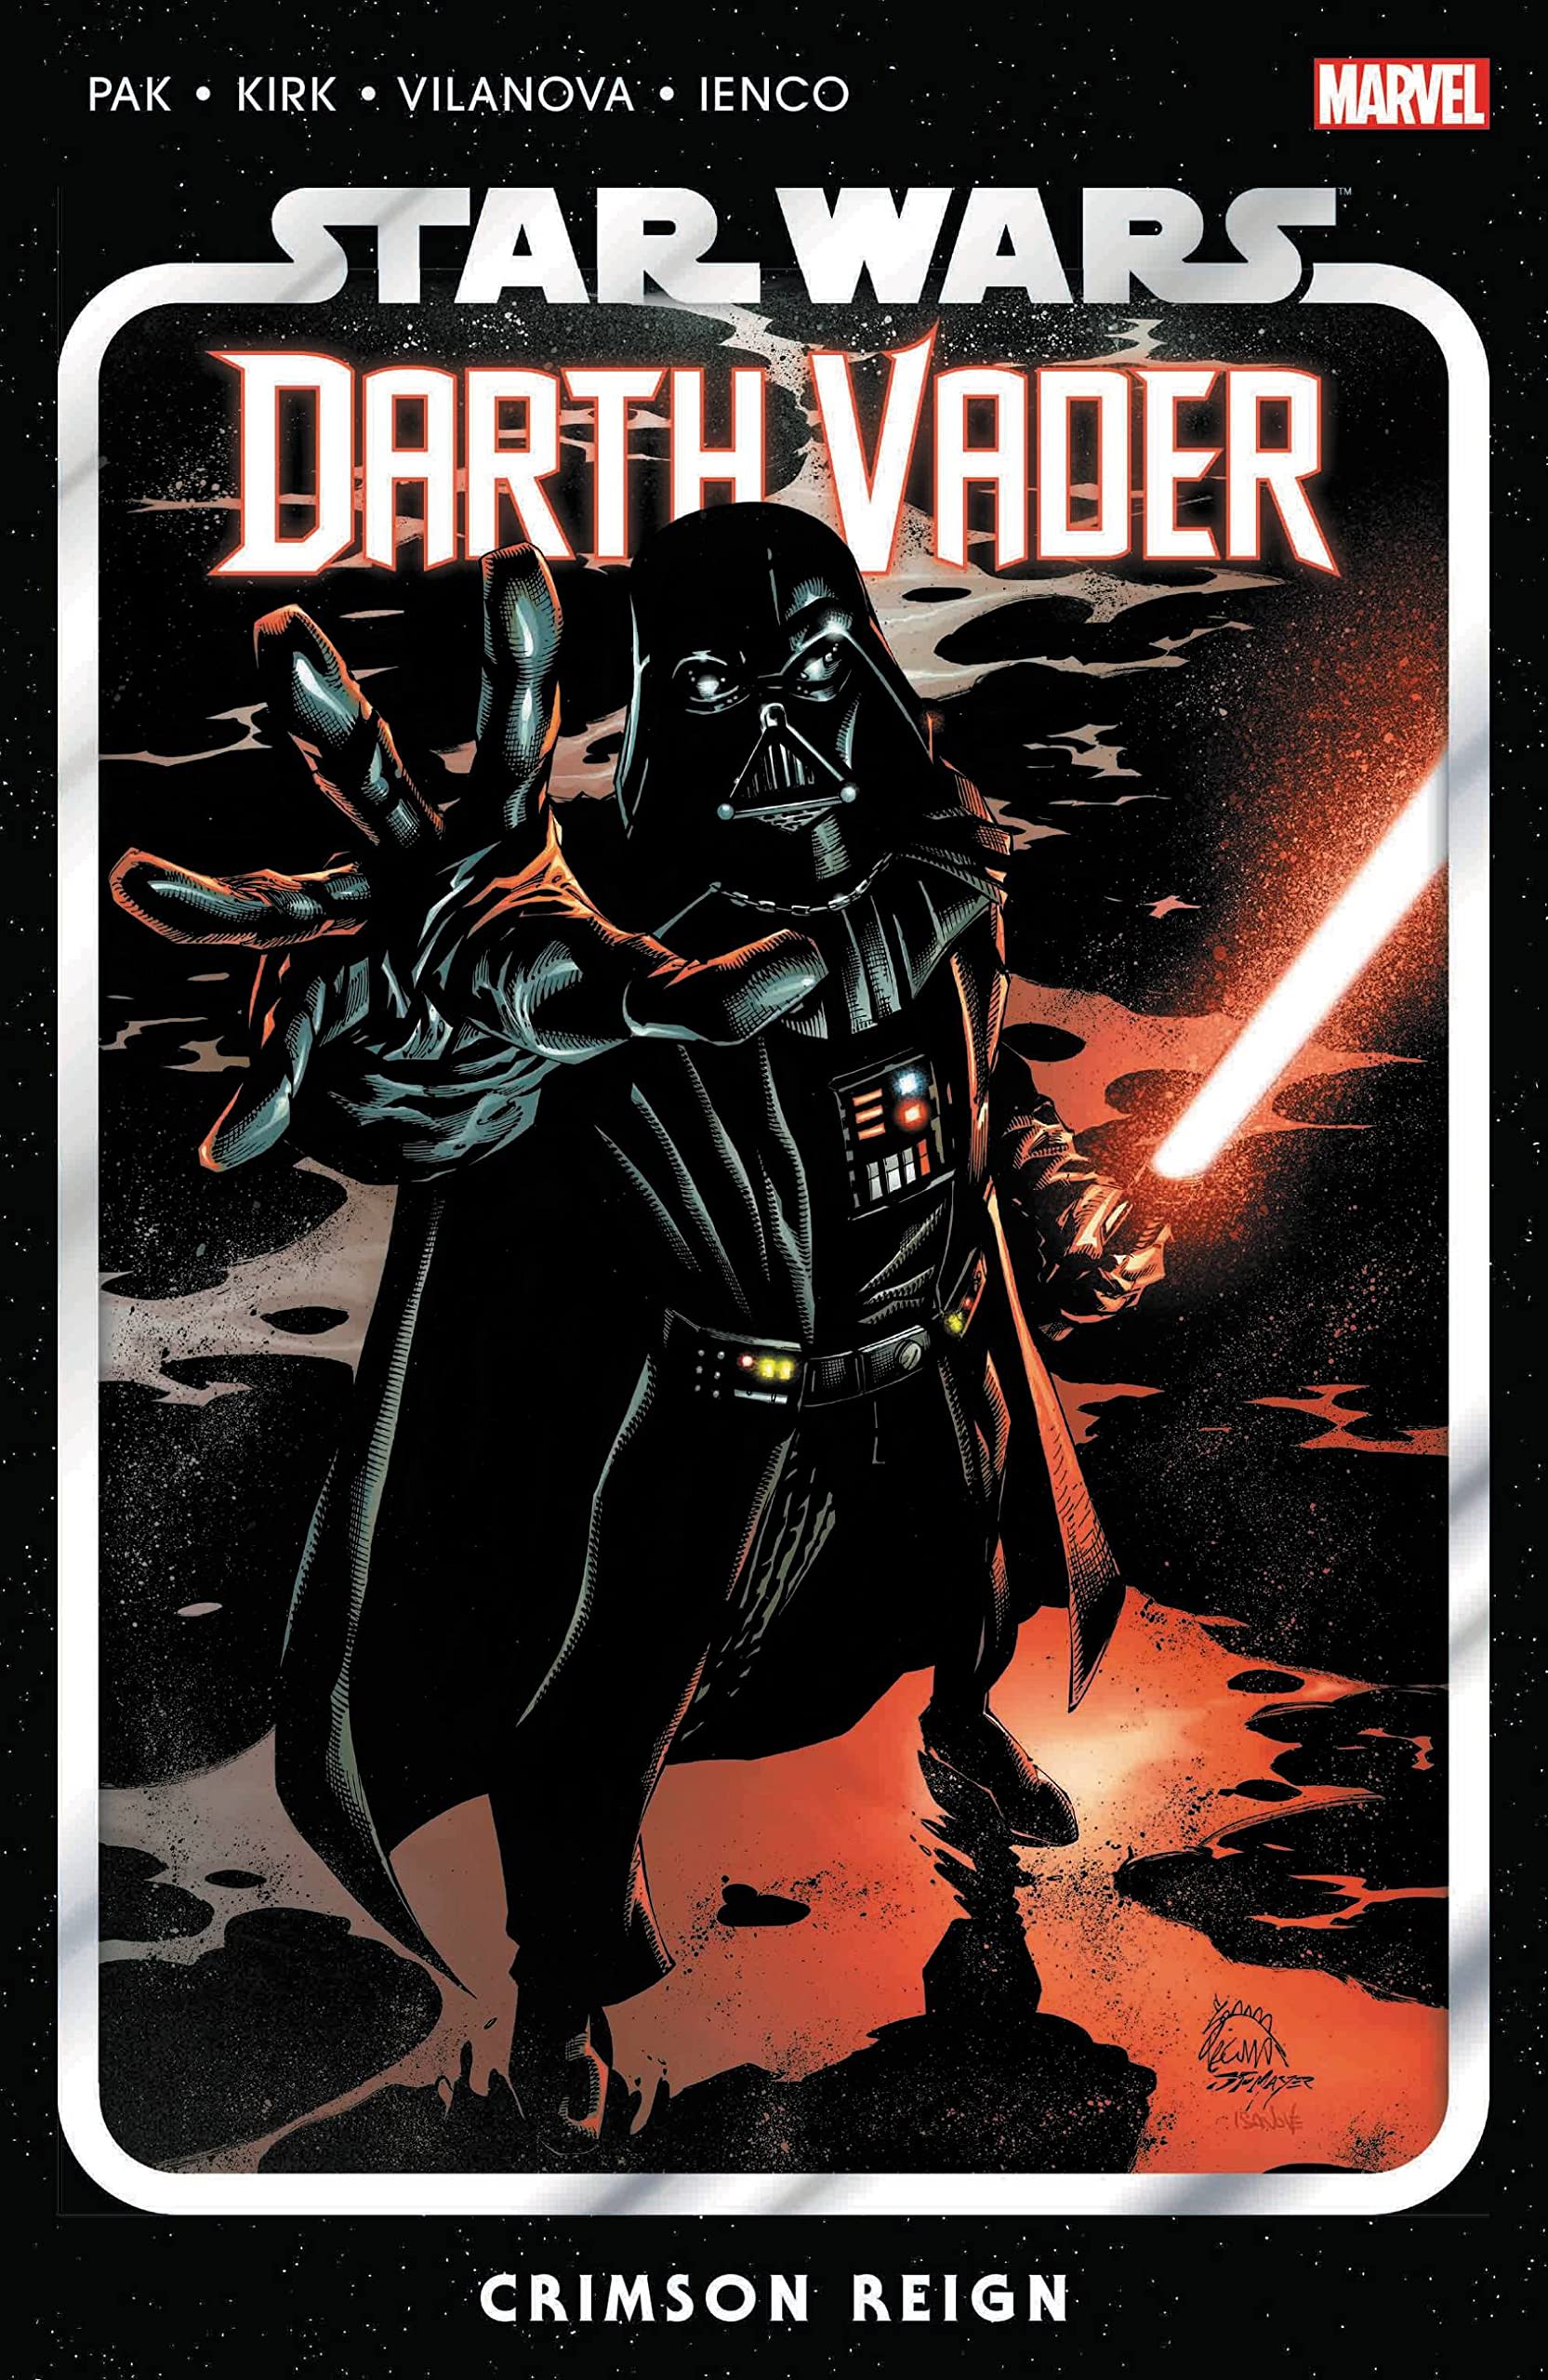 Star Wars: Darth Vader, Vol. 4: Crimson Reign by Greg Pak